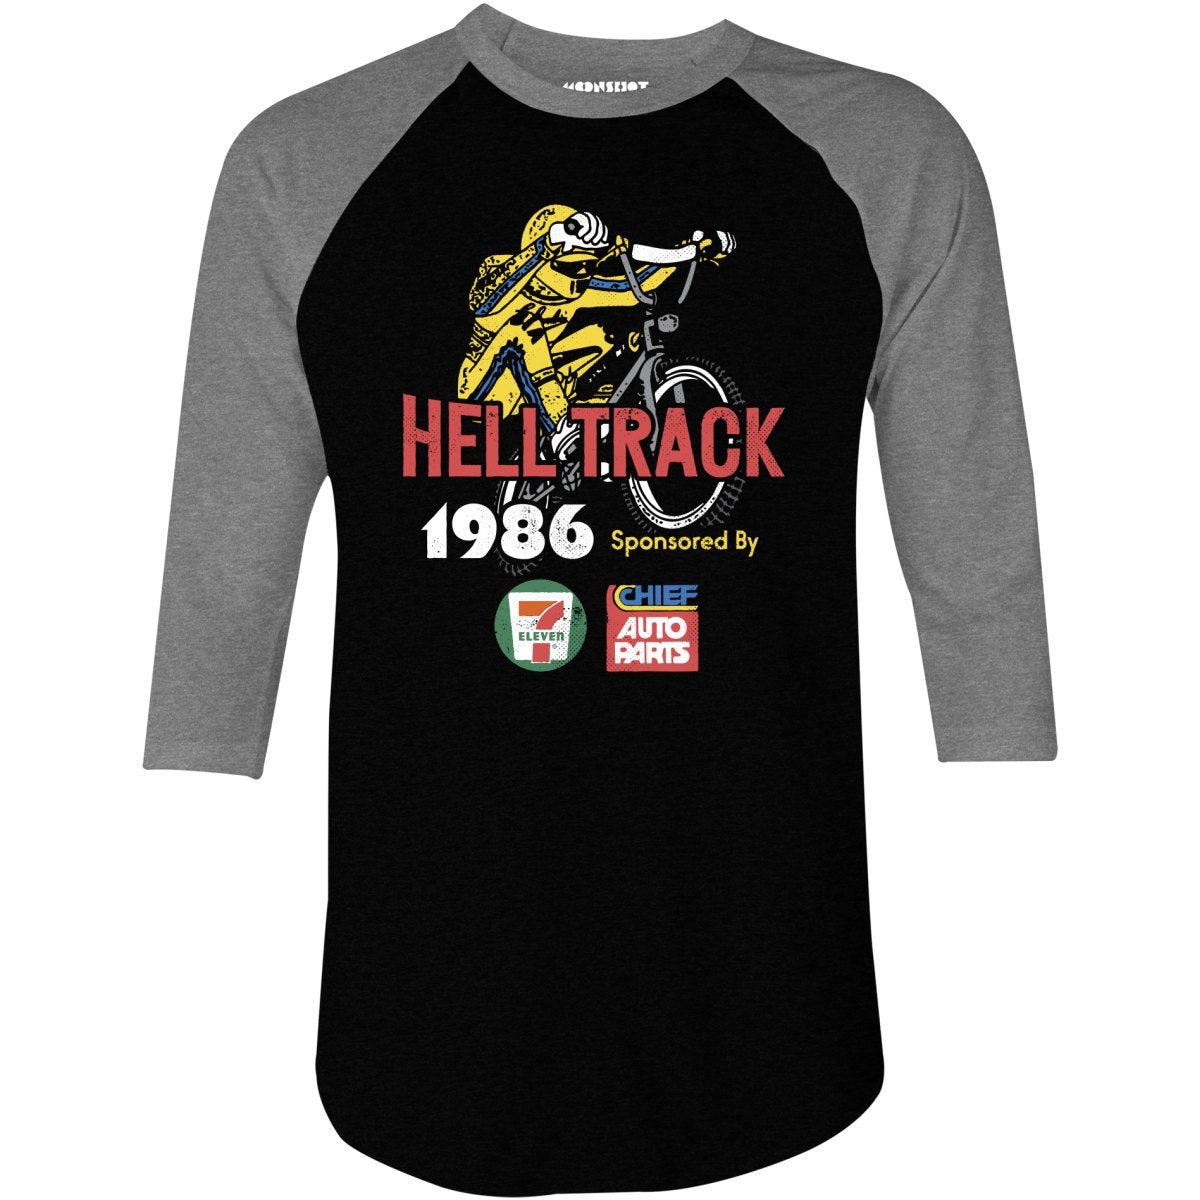 Helltrack - 3/4 Sleeve Raglan T-Shirt